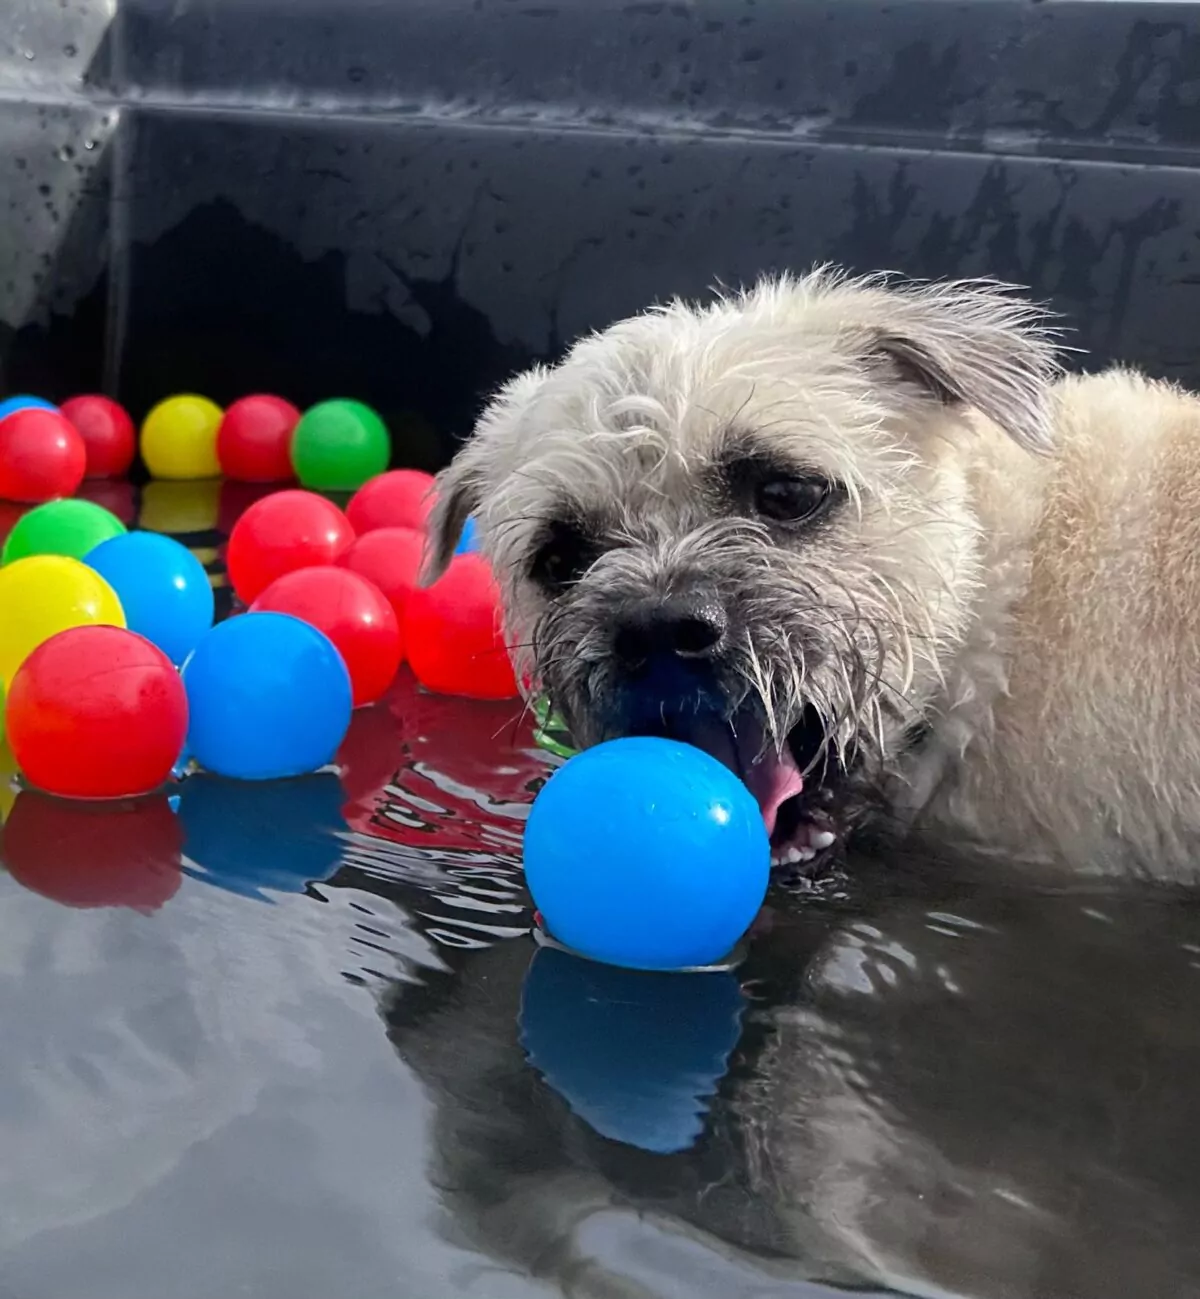 An older dog enjoying hydrotherapy fun with balls